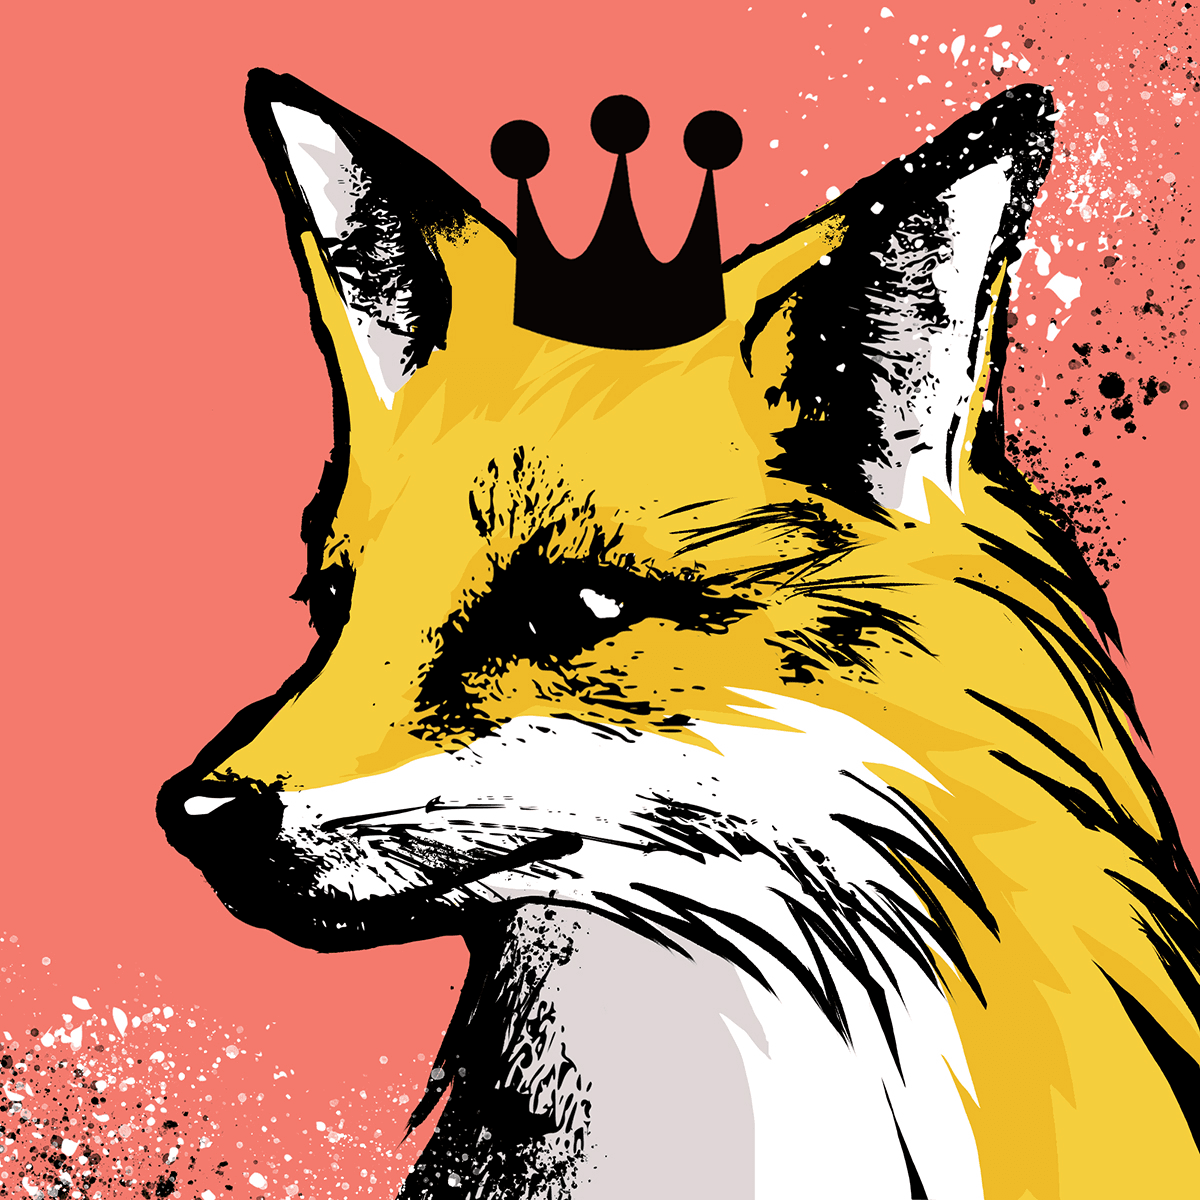 #14 / I'm the fox prince.